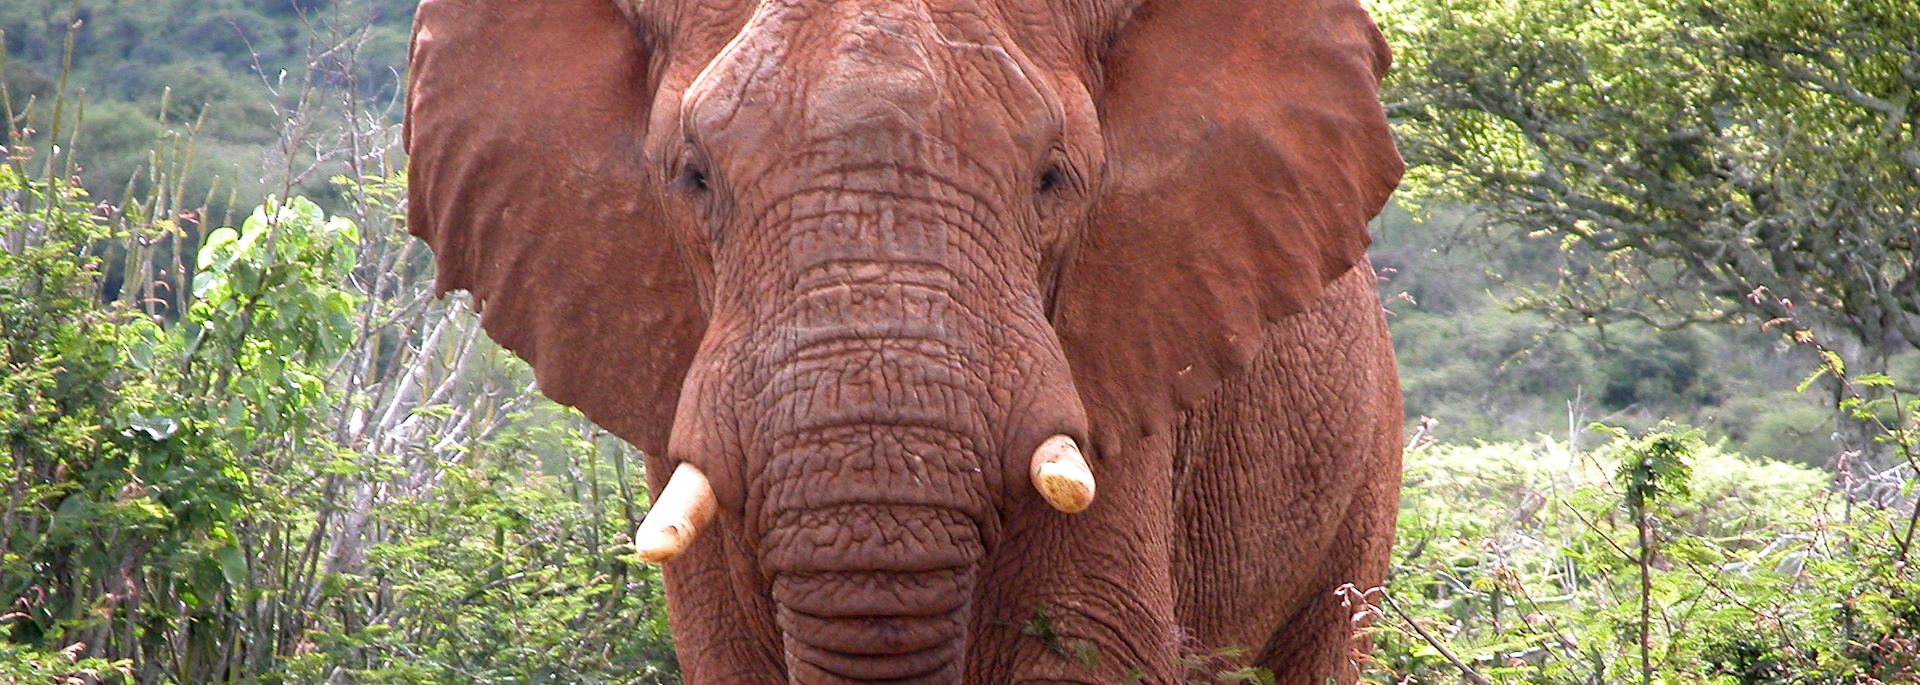 Elephant in Loisaba Wilderness Conservancy